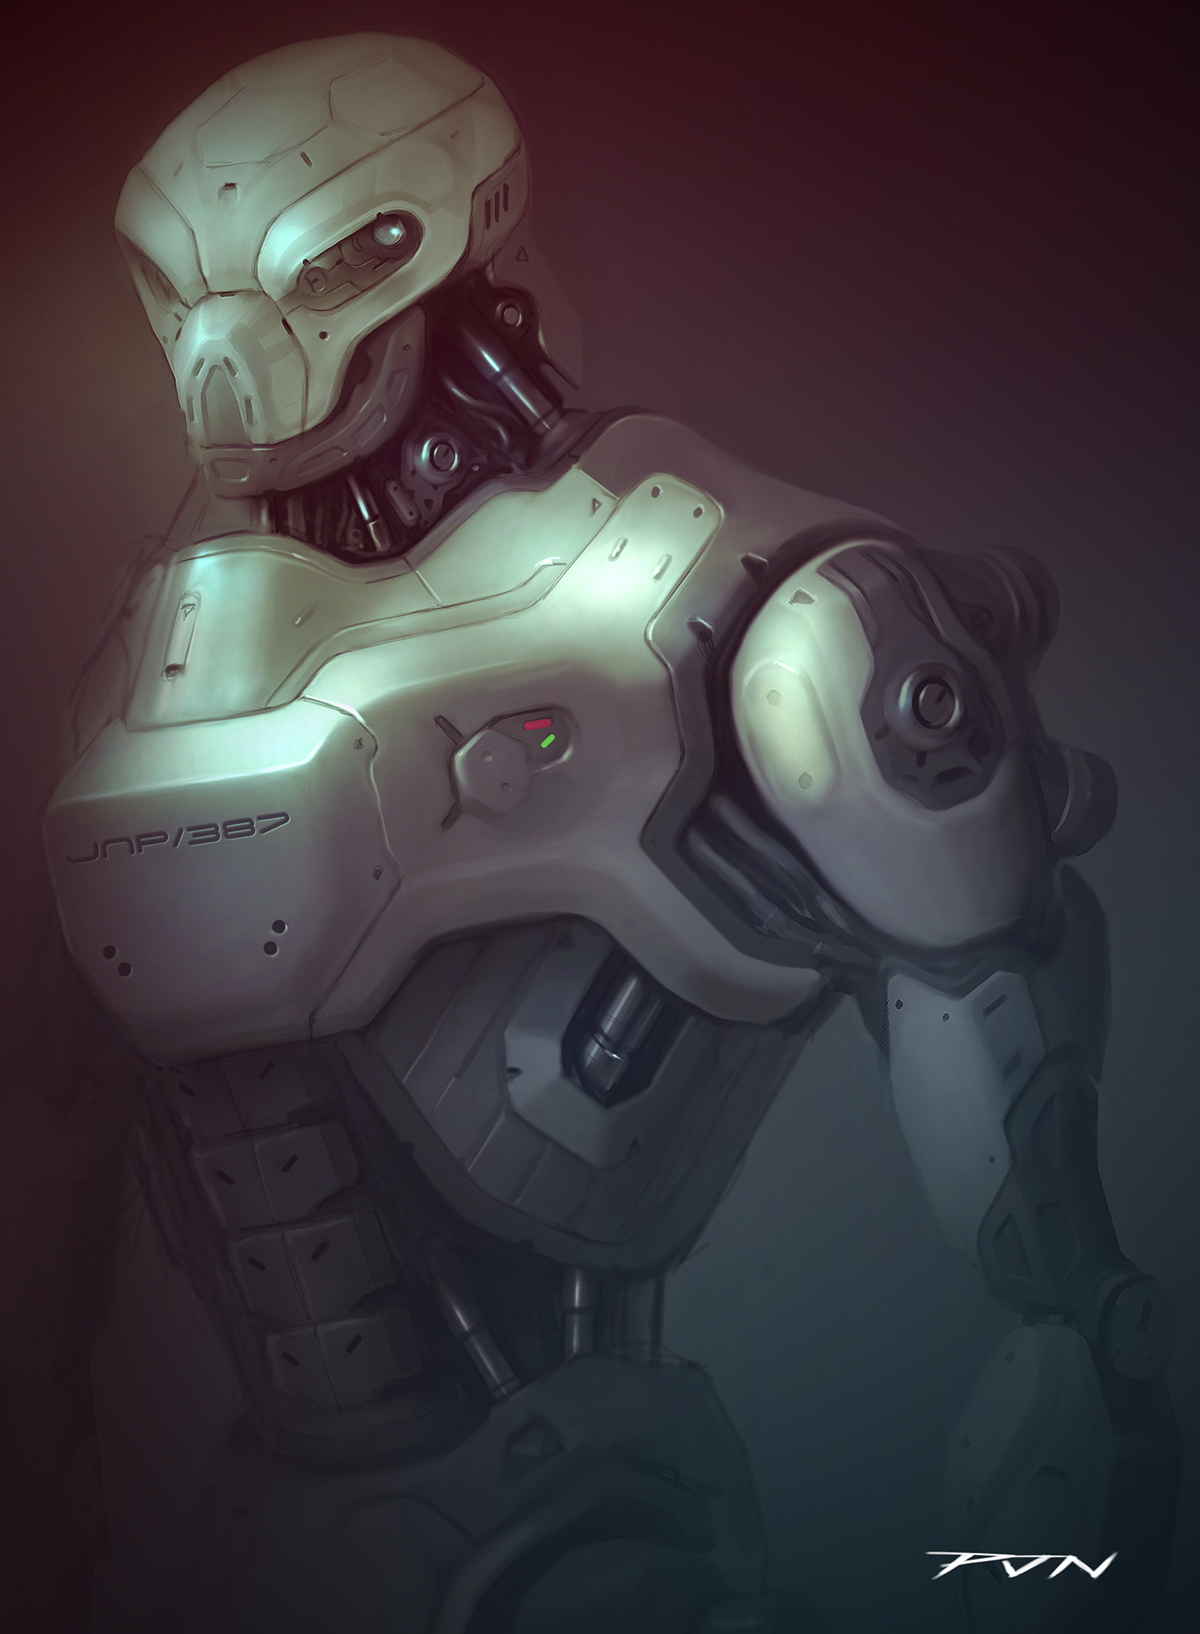 Cyborg future futuristic mech robots robot droid human concept concept art digital painting